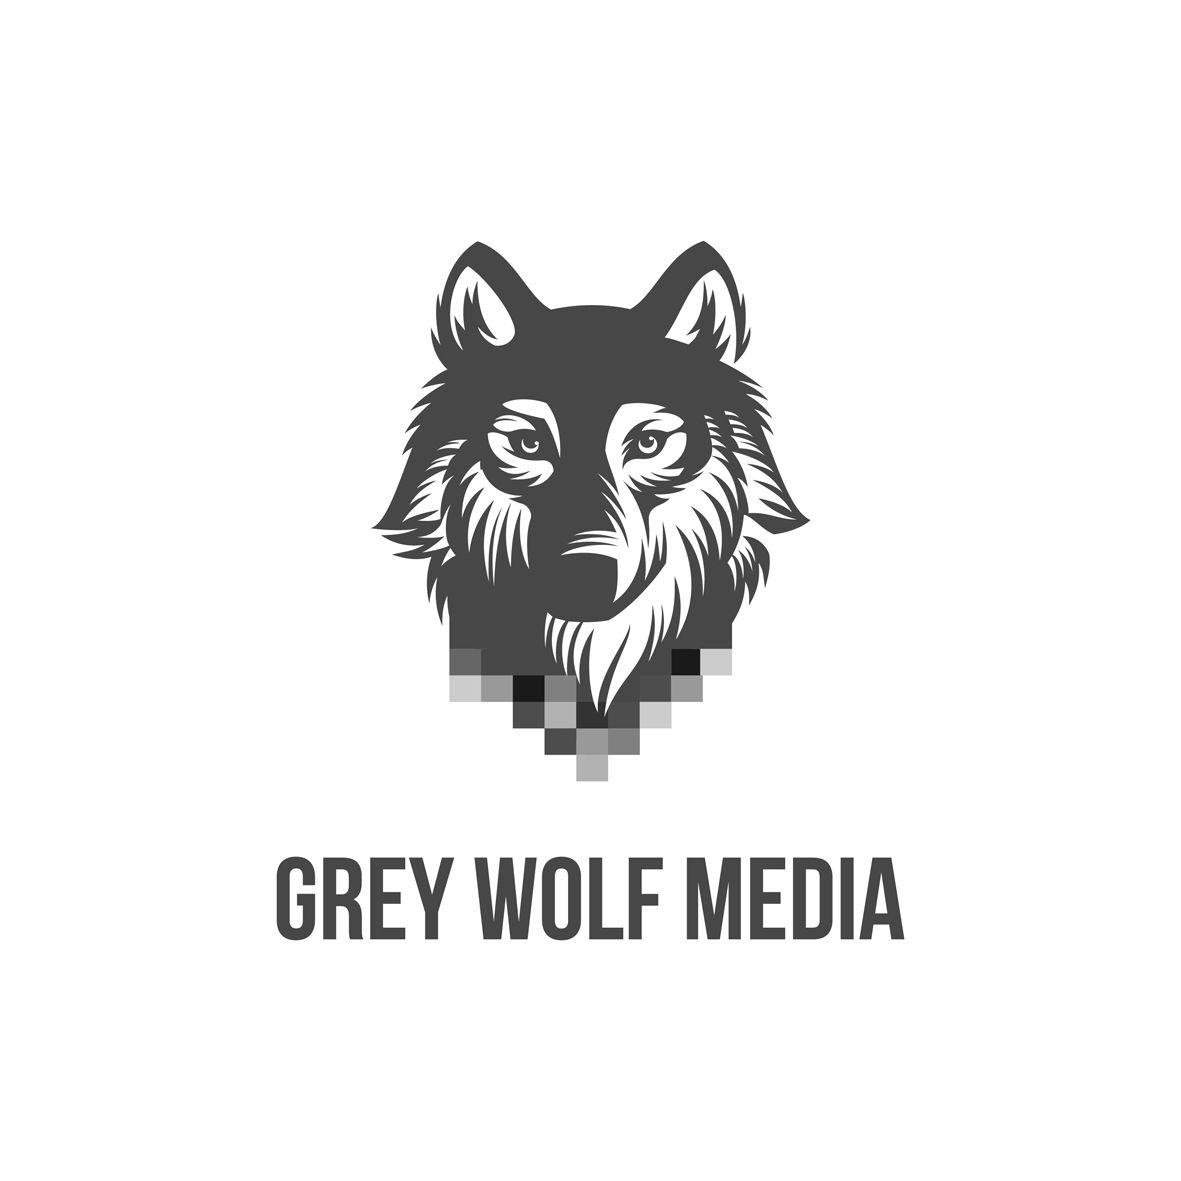 Grey Wolf Logo - Upmarket, Bold, Business Logo Design for Grey Wolf Media by Enea ...